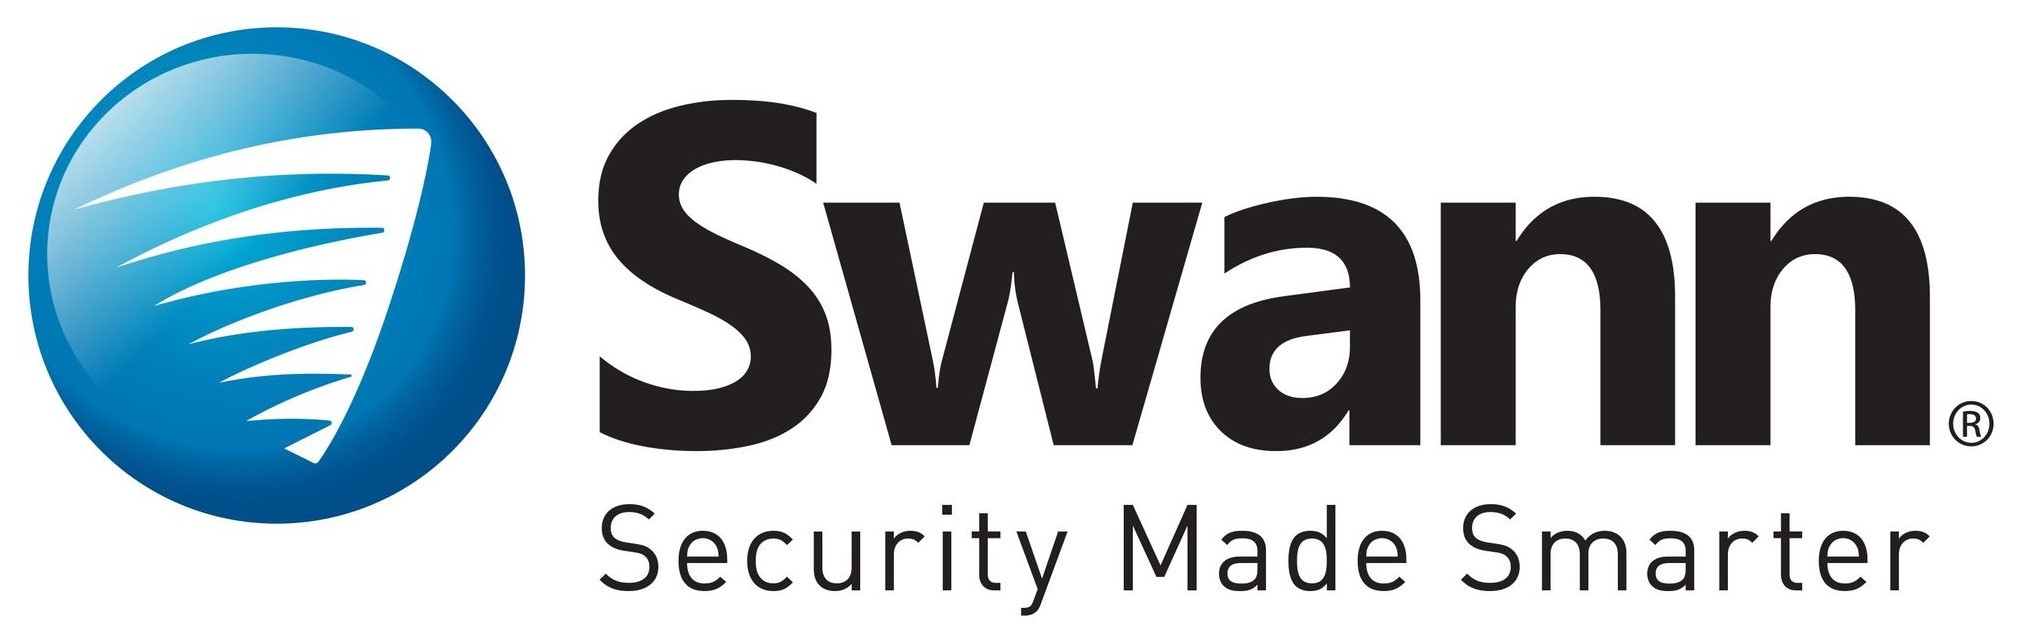 S wan. Swann. Swann - Security made Smarter. Secure Smarter logo. Infinova.